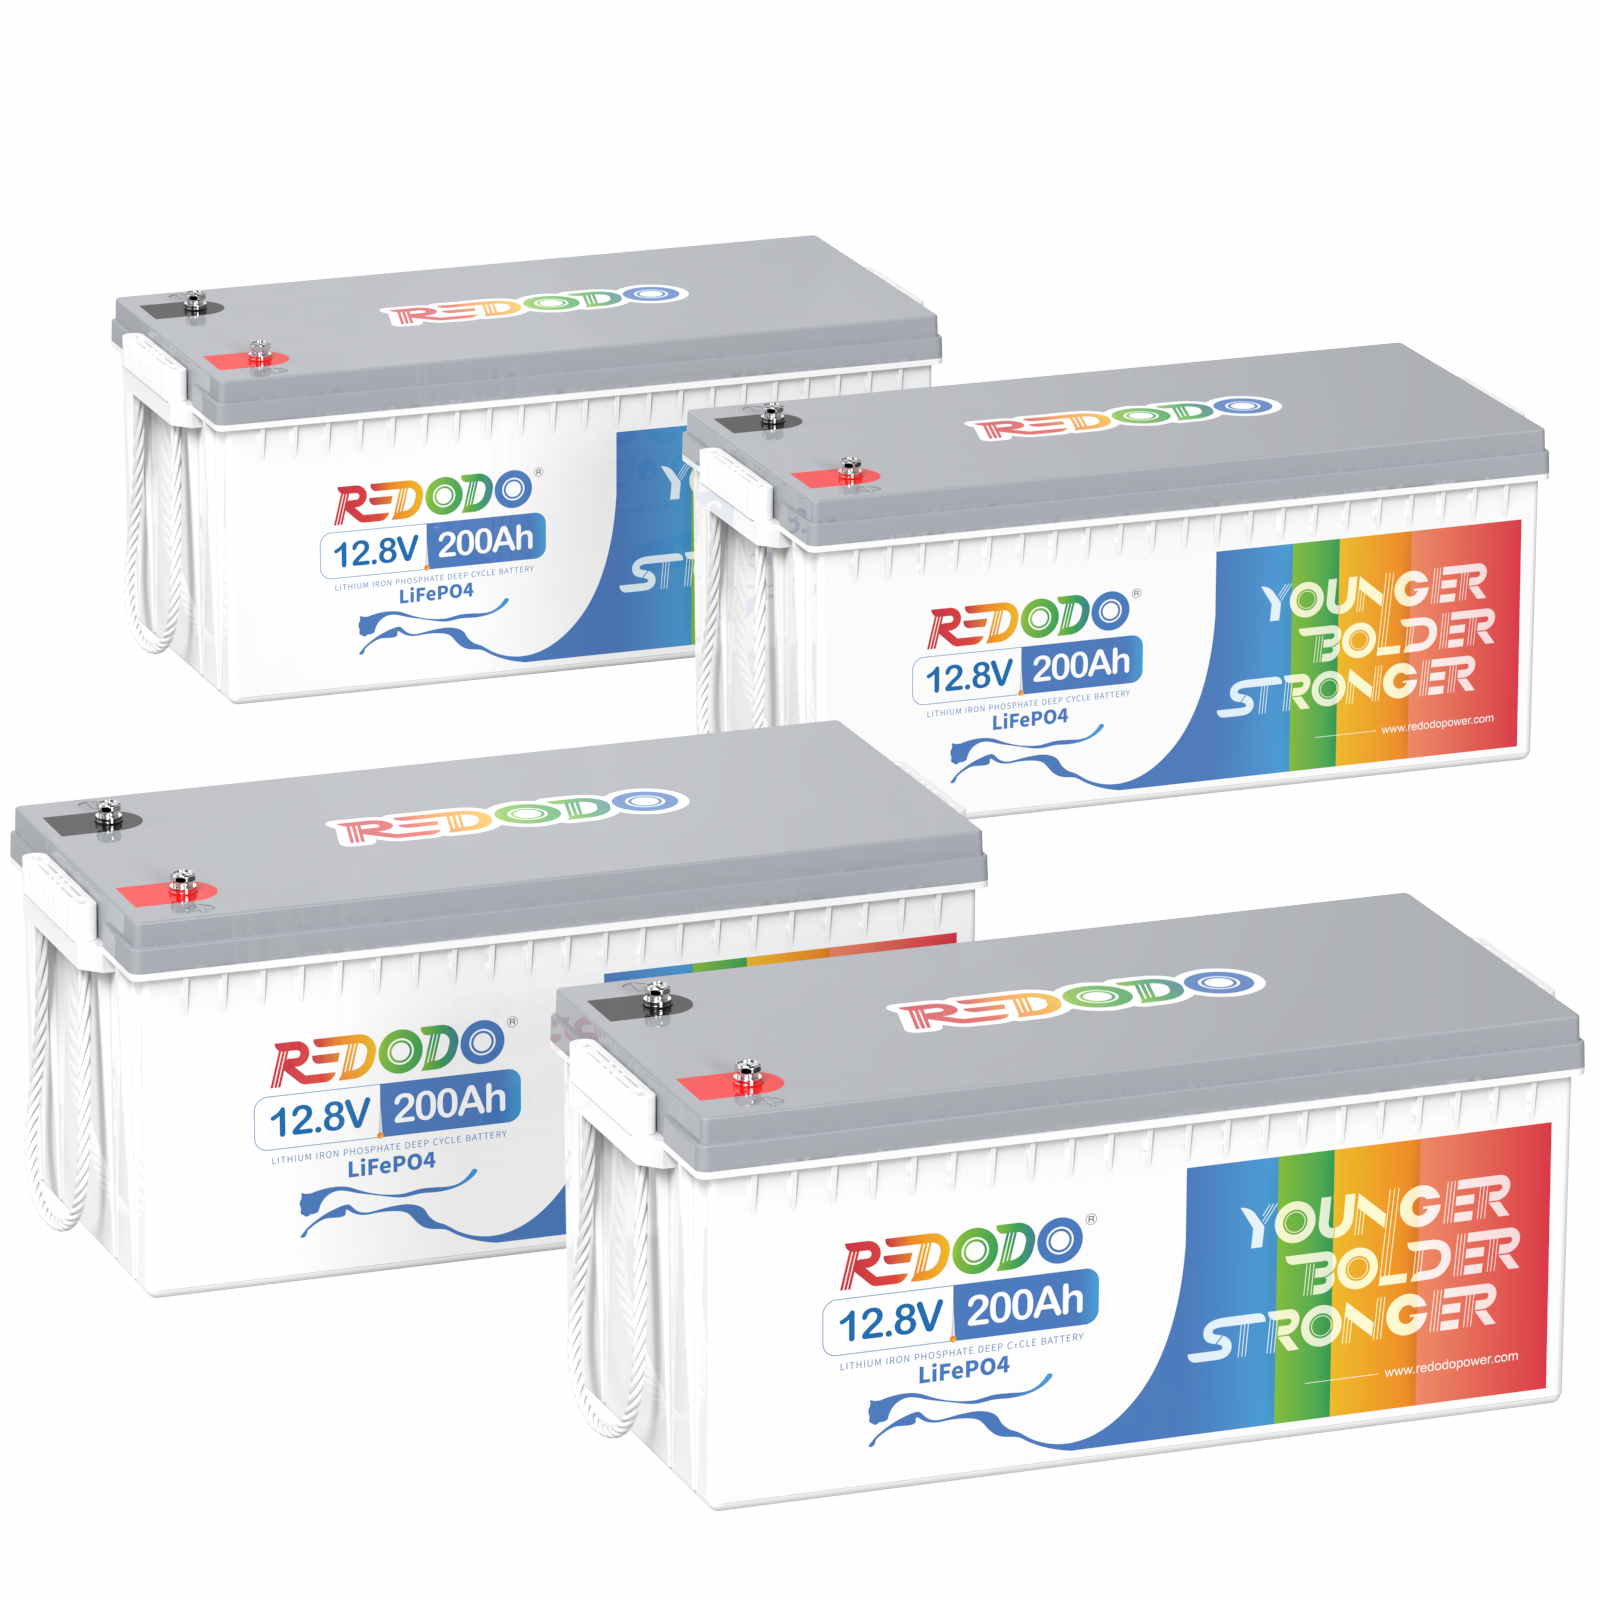 Redodo 12V 200Ah LiFePO4 Battery | 2.56kWh & 1.28kW Redodo